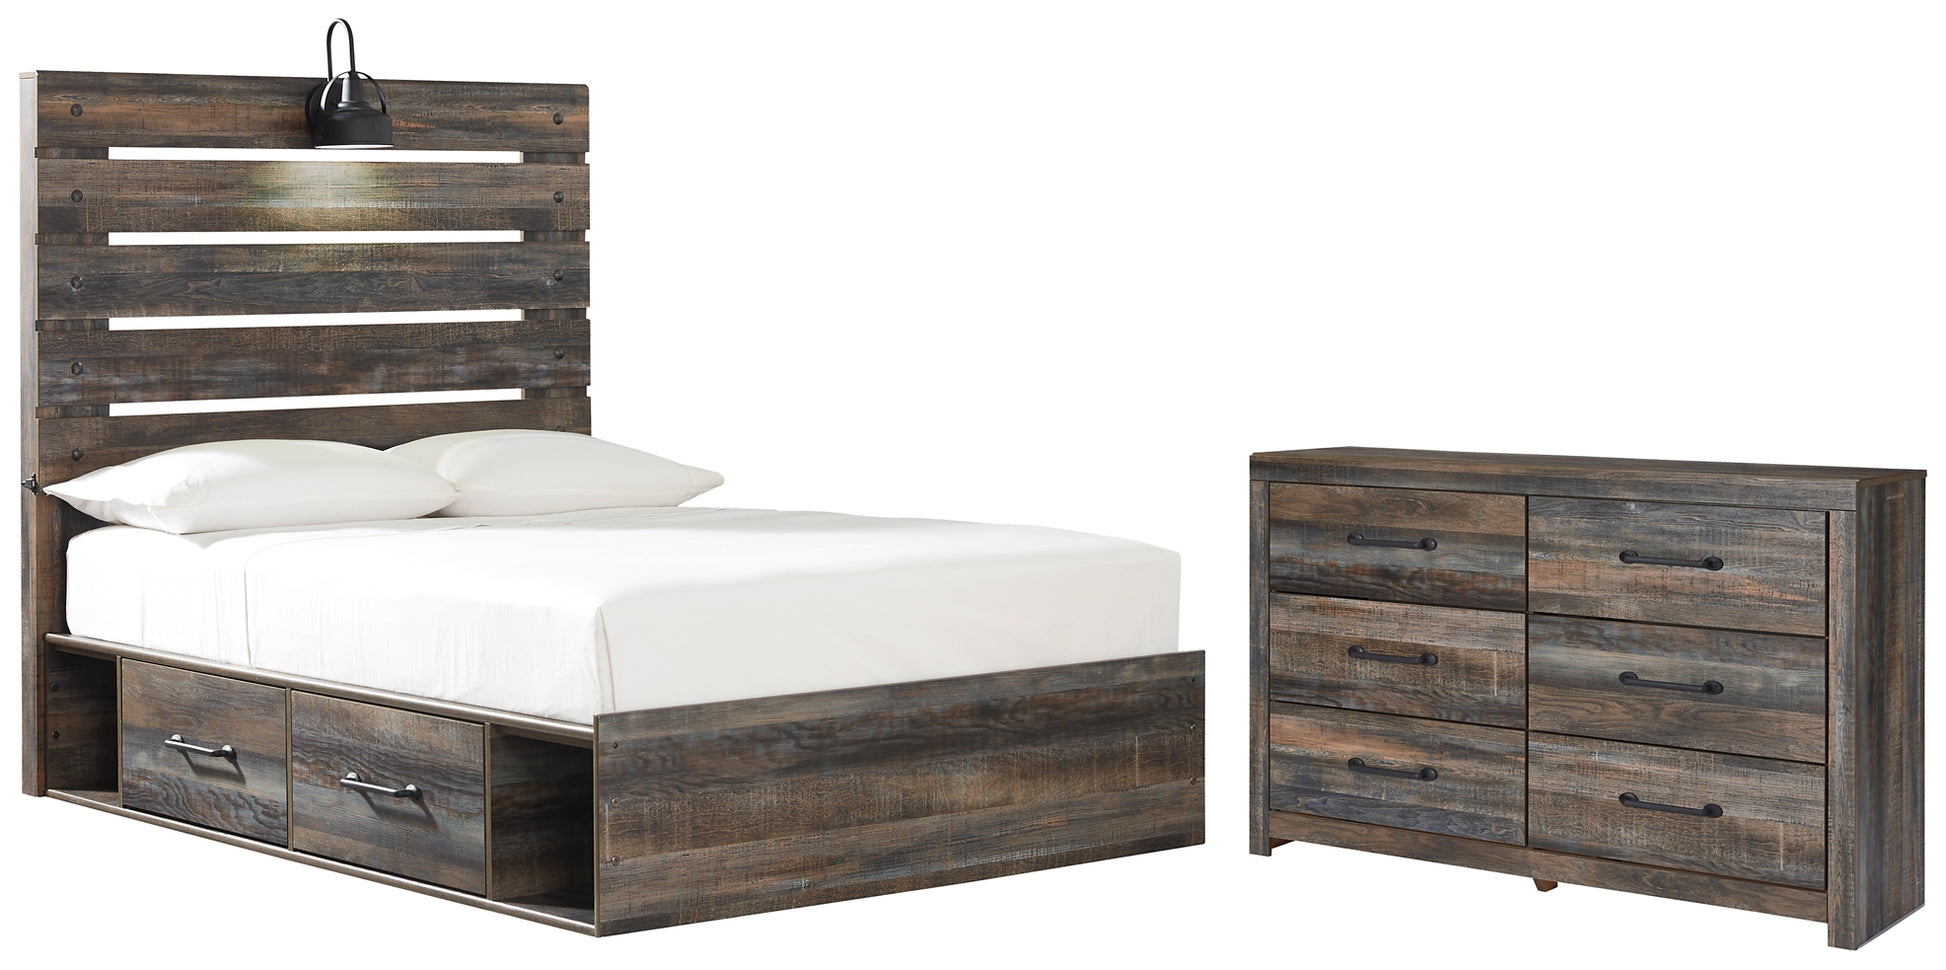 Drystan Twin Panel Bed with 2 Storage Drawers with Dresser Wilson Furniture (OH)  in Bridgeport, Ohio. Serving Bridgeport, Yorkville, Bellaire, & Avondale